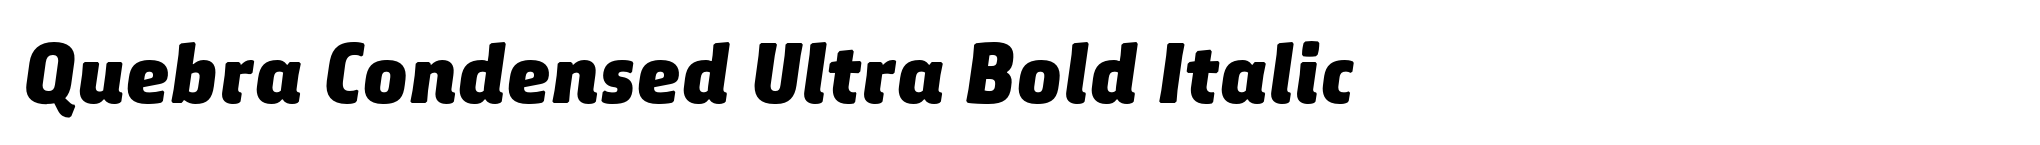 Quebra Condensed Ultra Bold Italic image